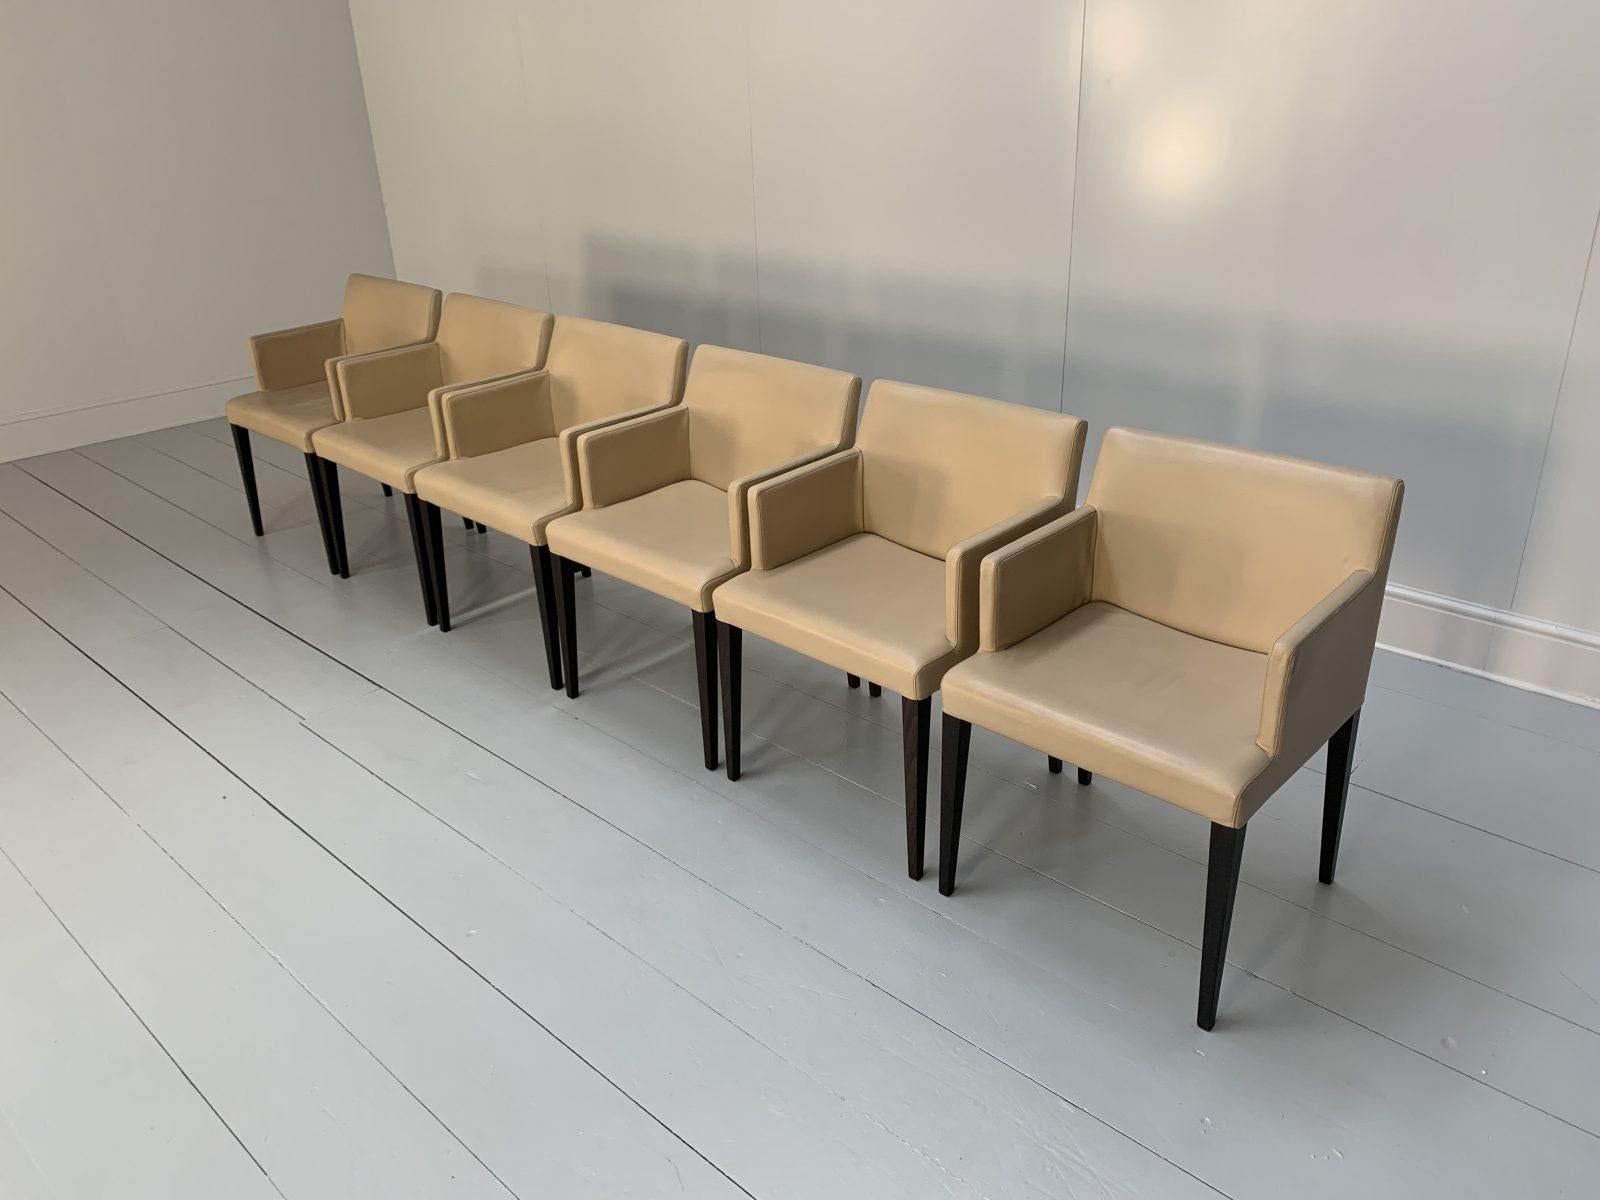 Suite of 6 Poltrona Frau “Liz B” Dining Chairs – In Brown “Pelle Frau” Leather 1